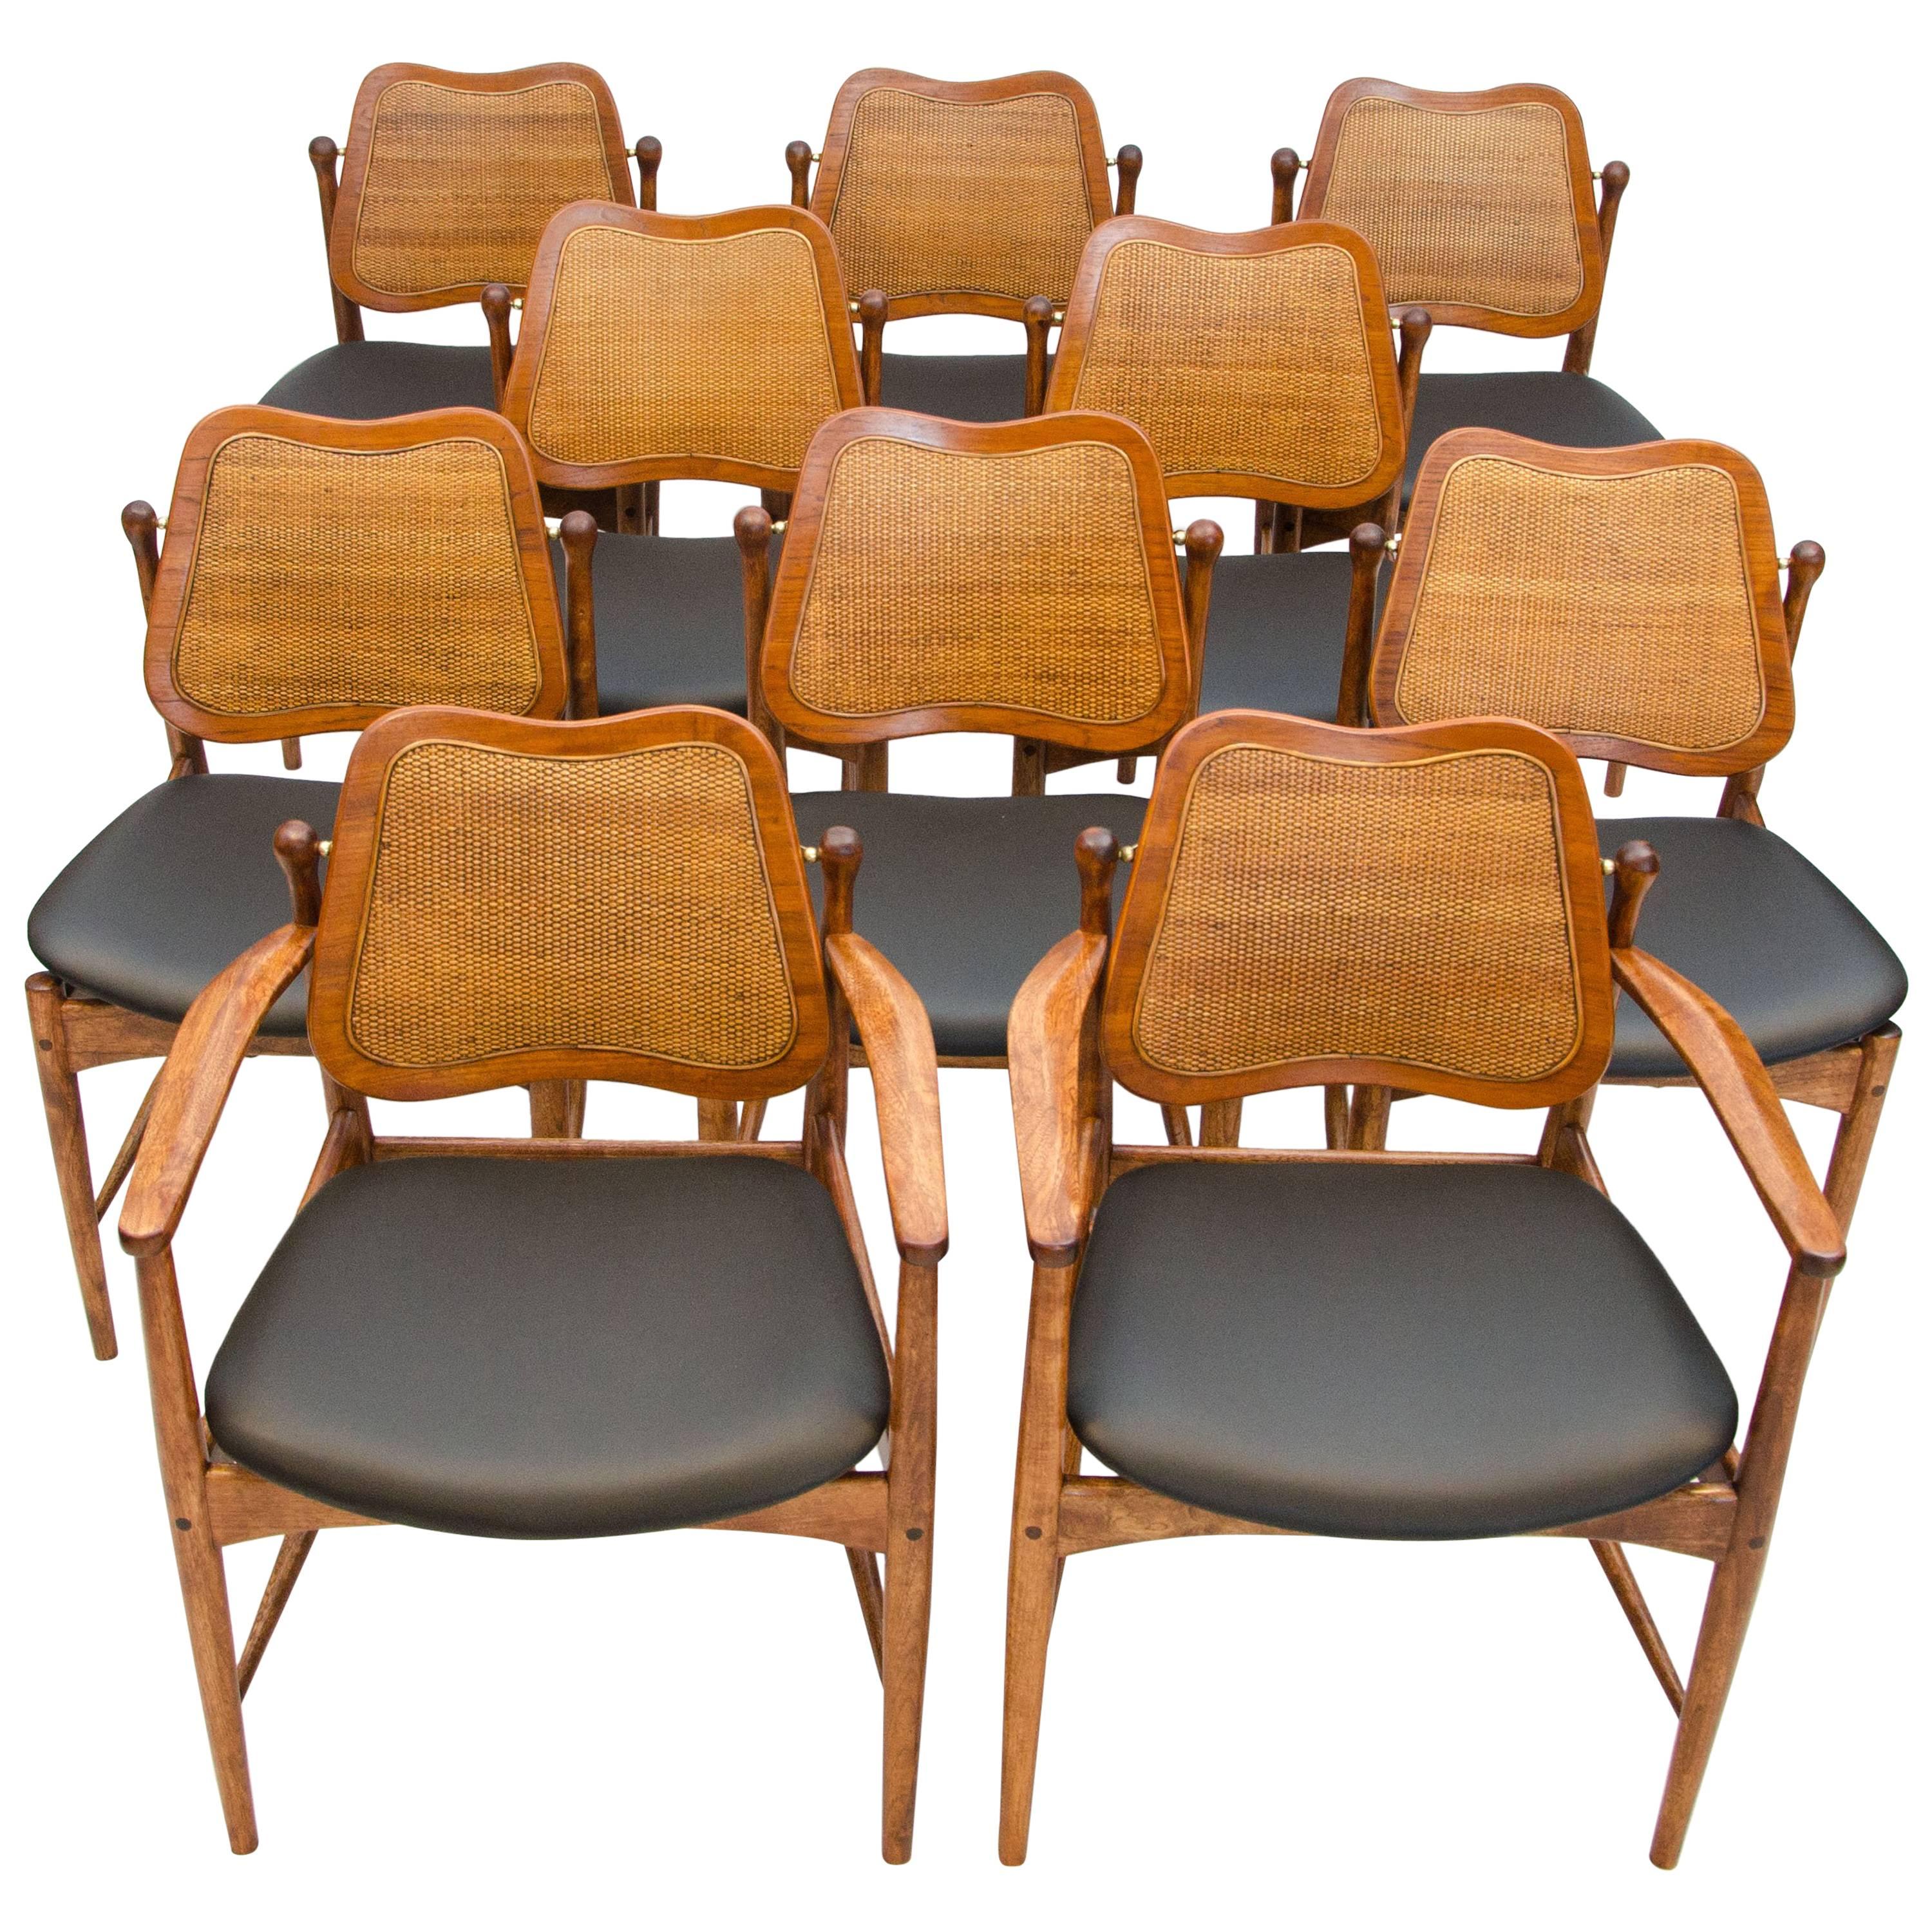 Rare Set of Ten Danish Modern Dining Chairs, Arne Vodder